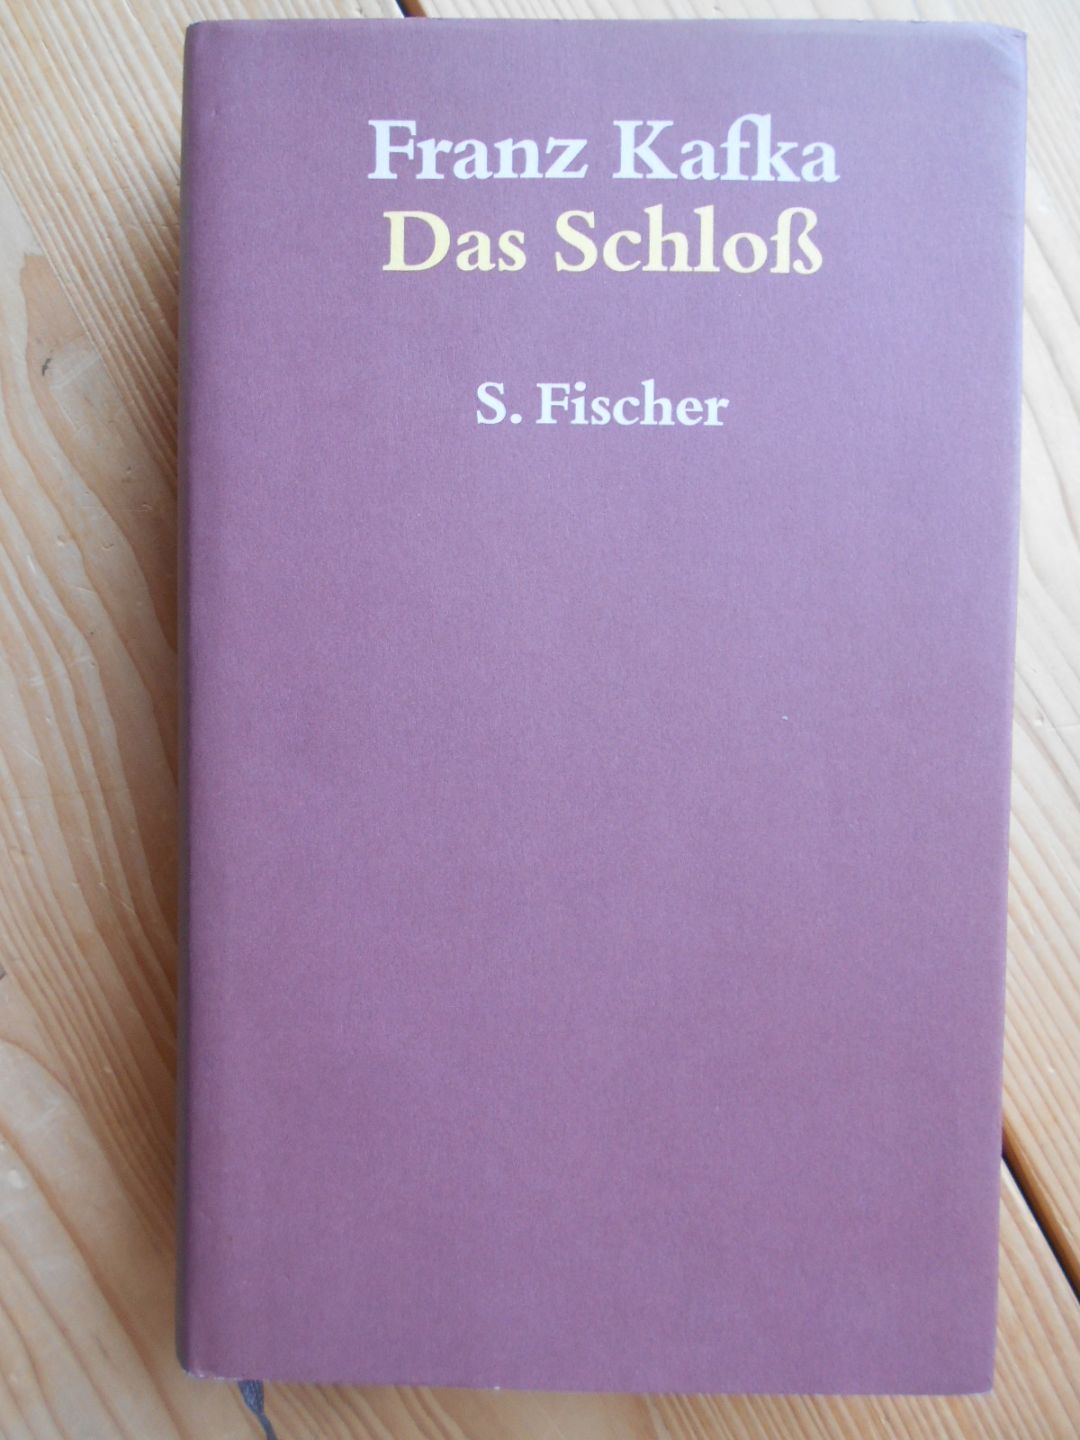 Das Schloß : Roman. - Deutsche Literatur ; Belletristik ; Roman - Kafka, Franz